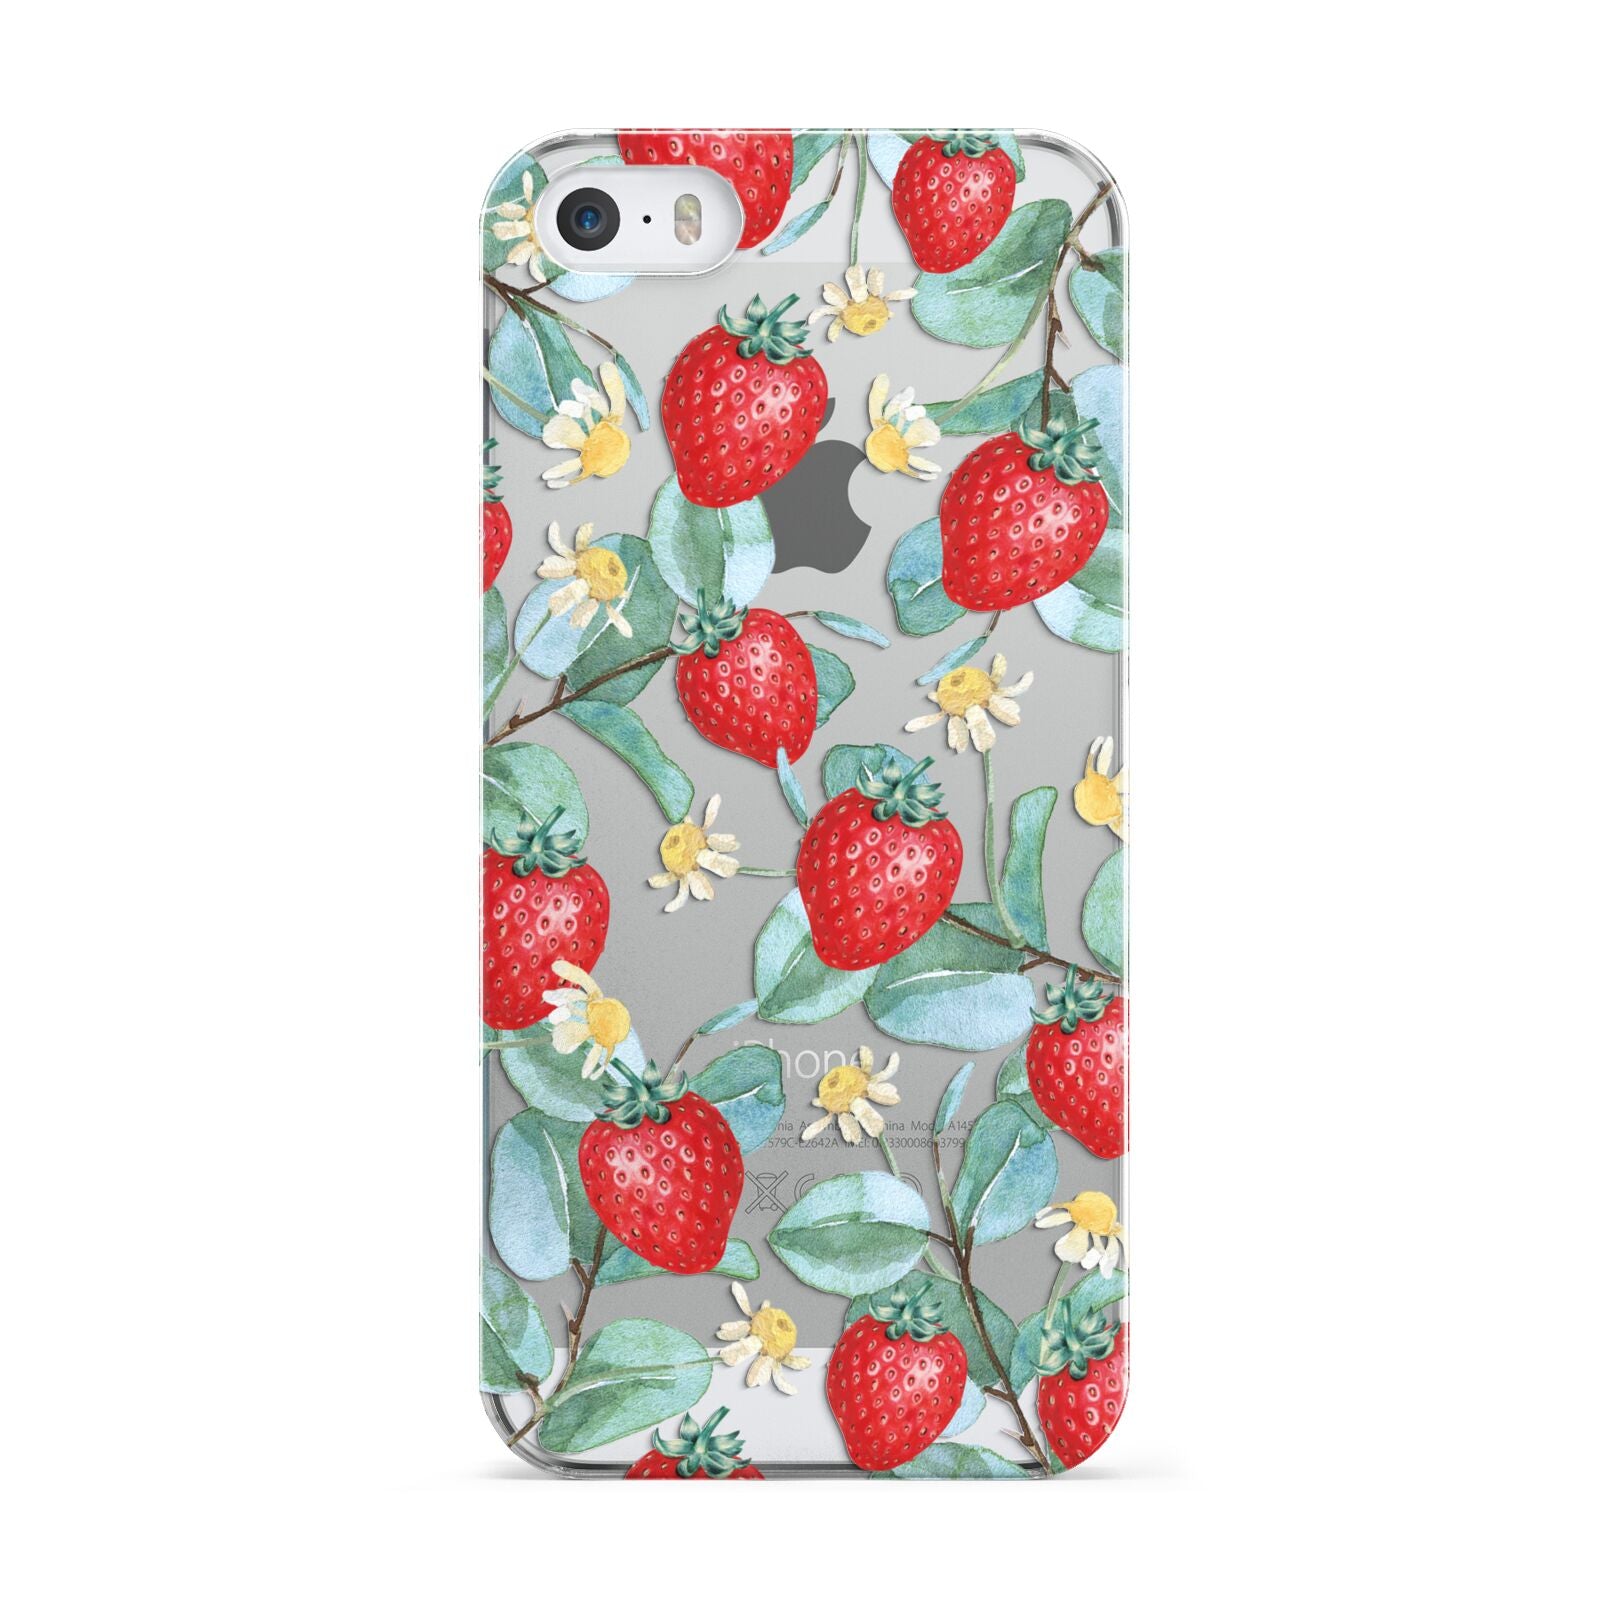 Strawberry Plant Apple iPhone 5 Case